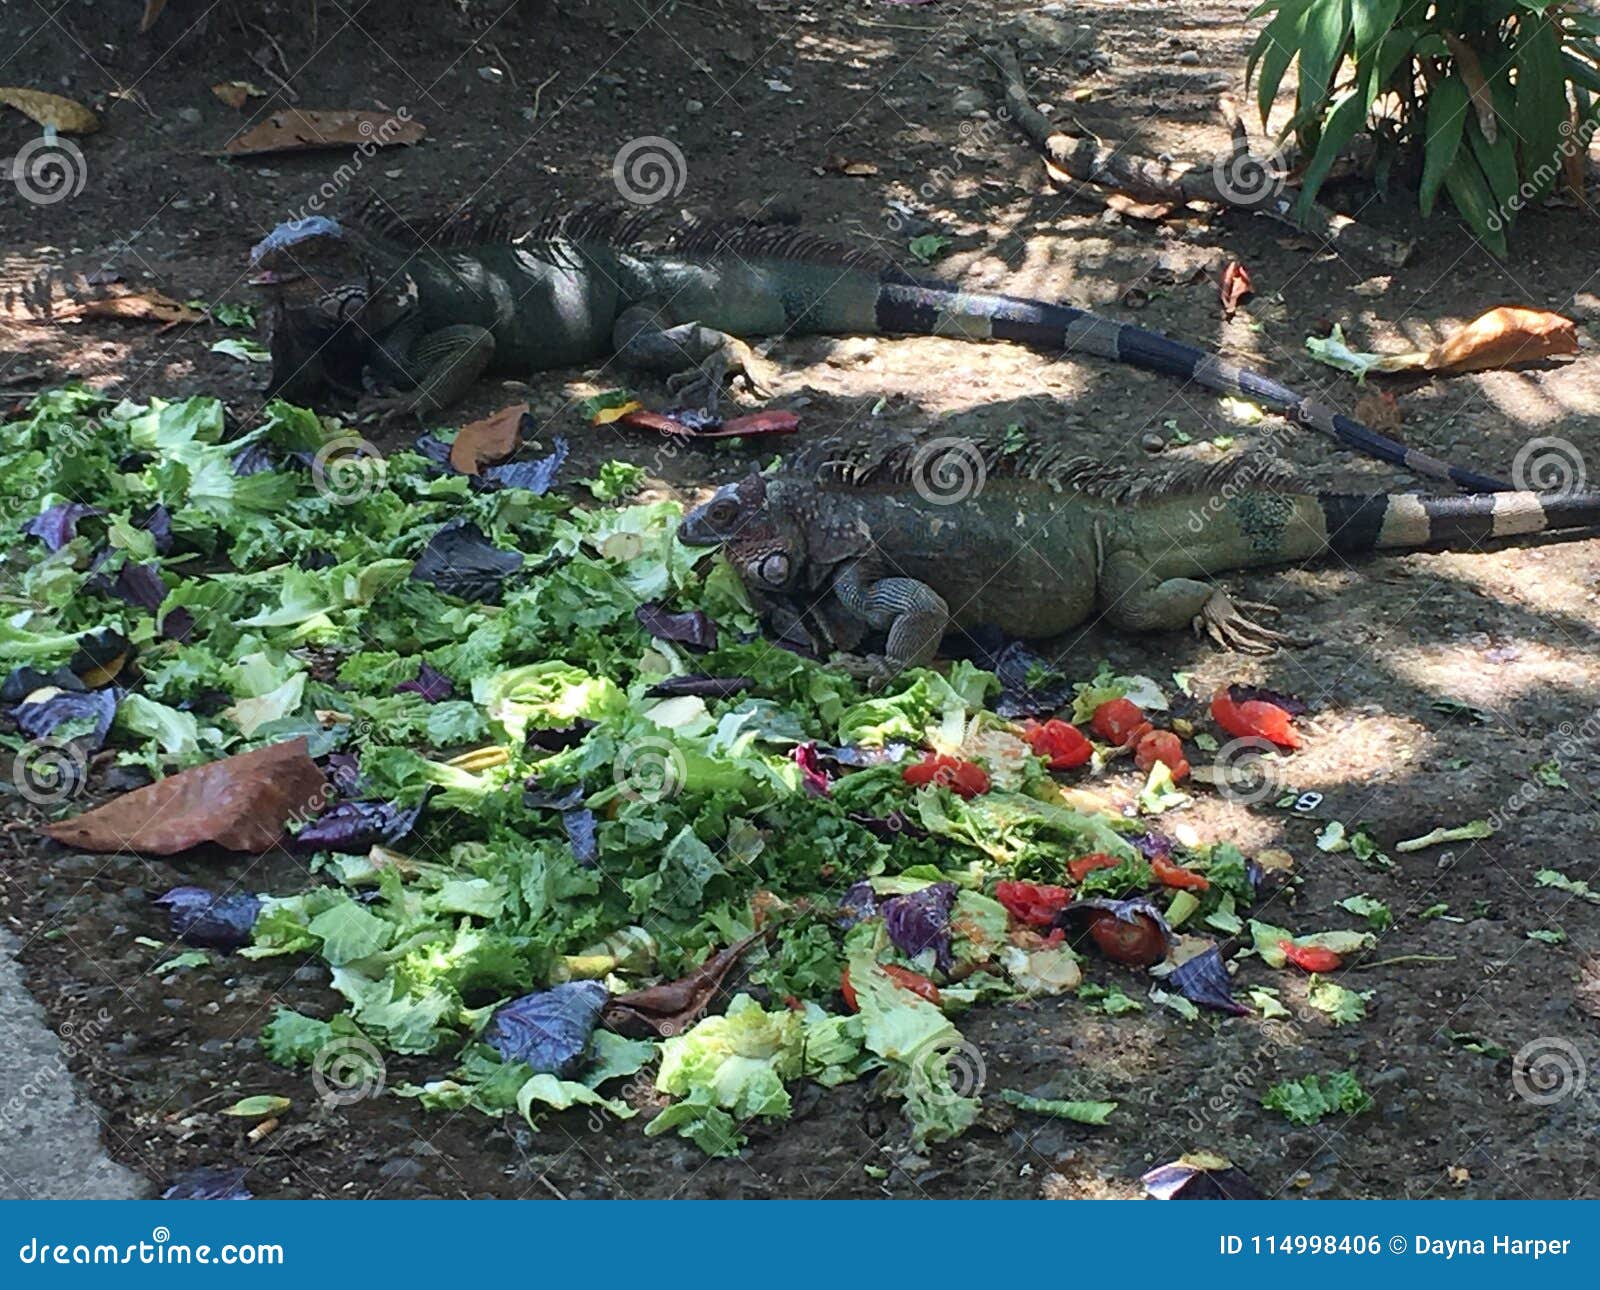 iguanas sharing lunch